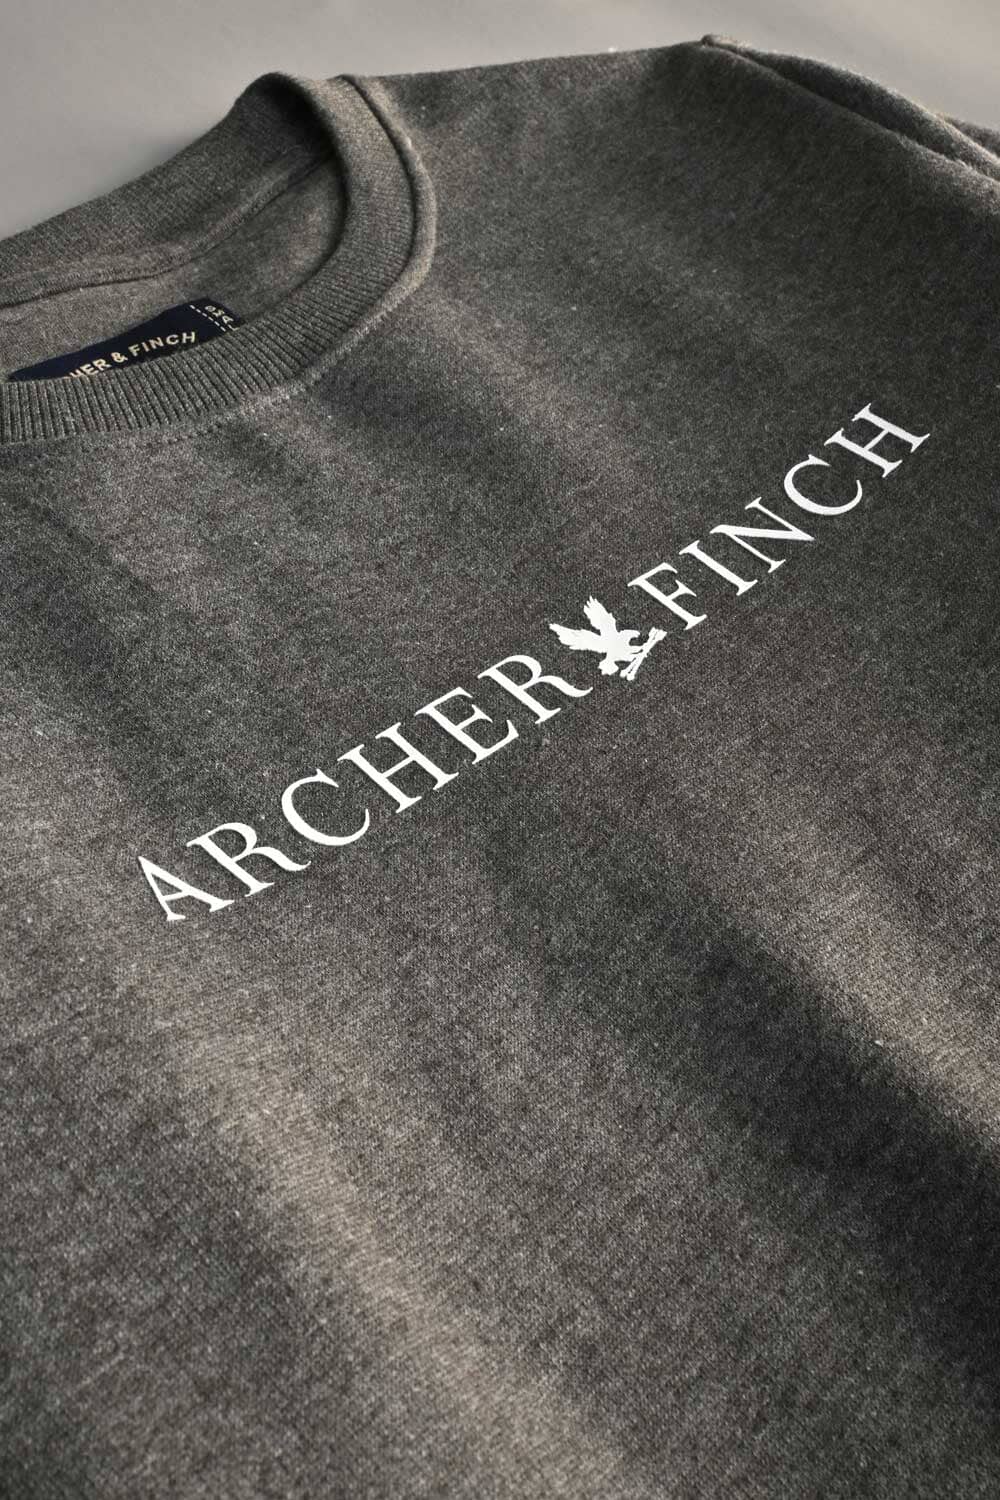 Archer & Finch Men's Logo Printed Fleece Sweat Shirt Men's Sweat Shirt LFS 